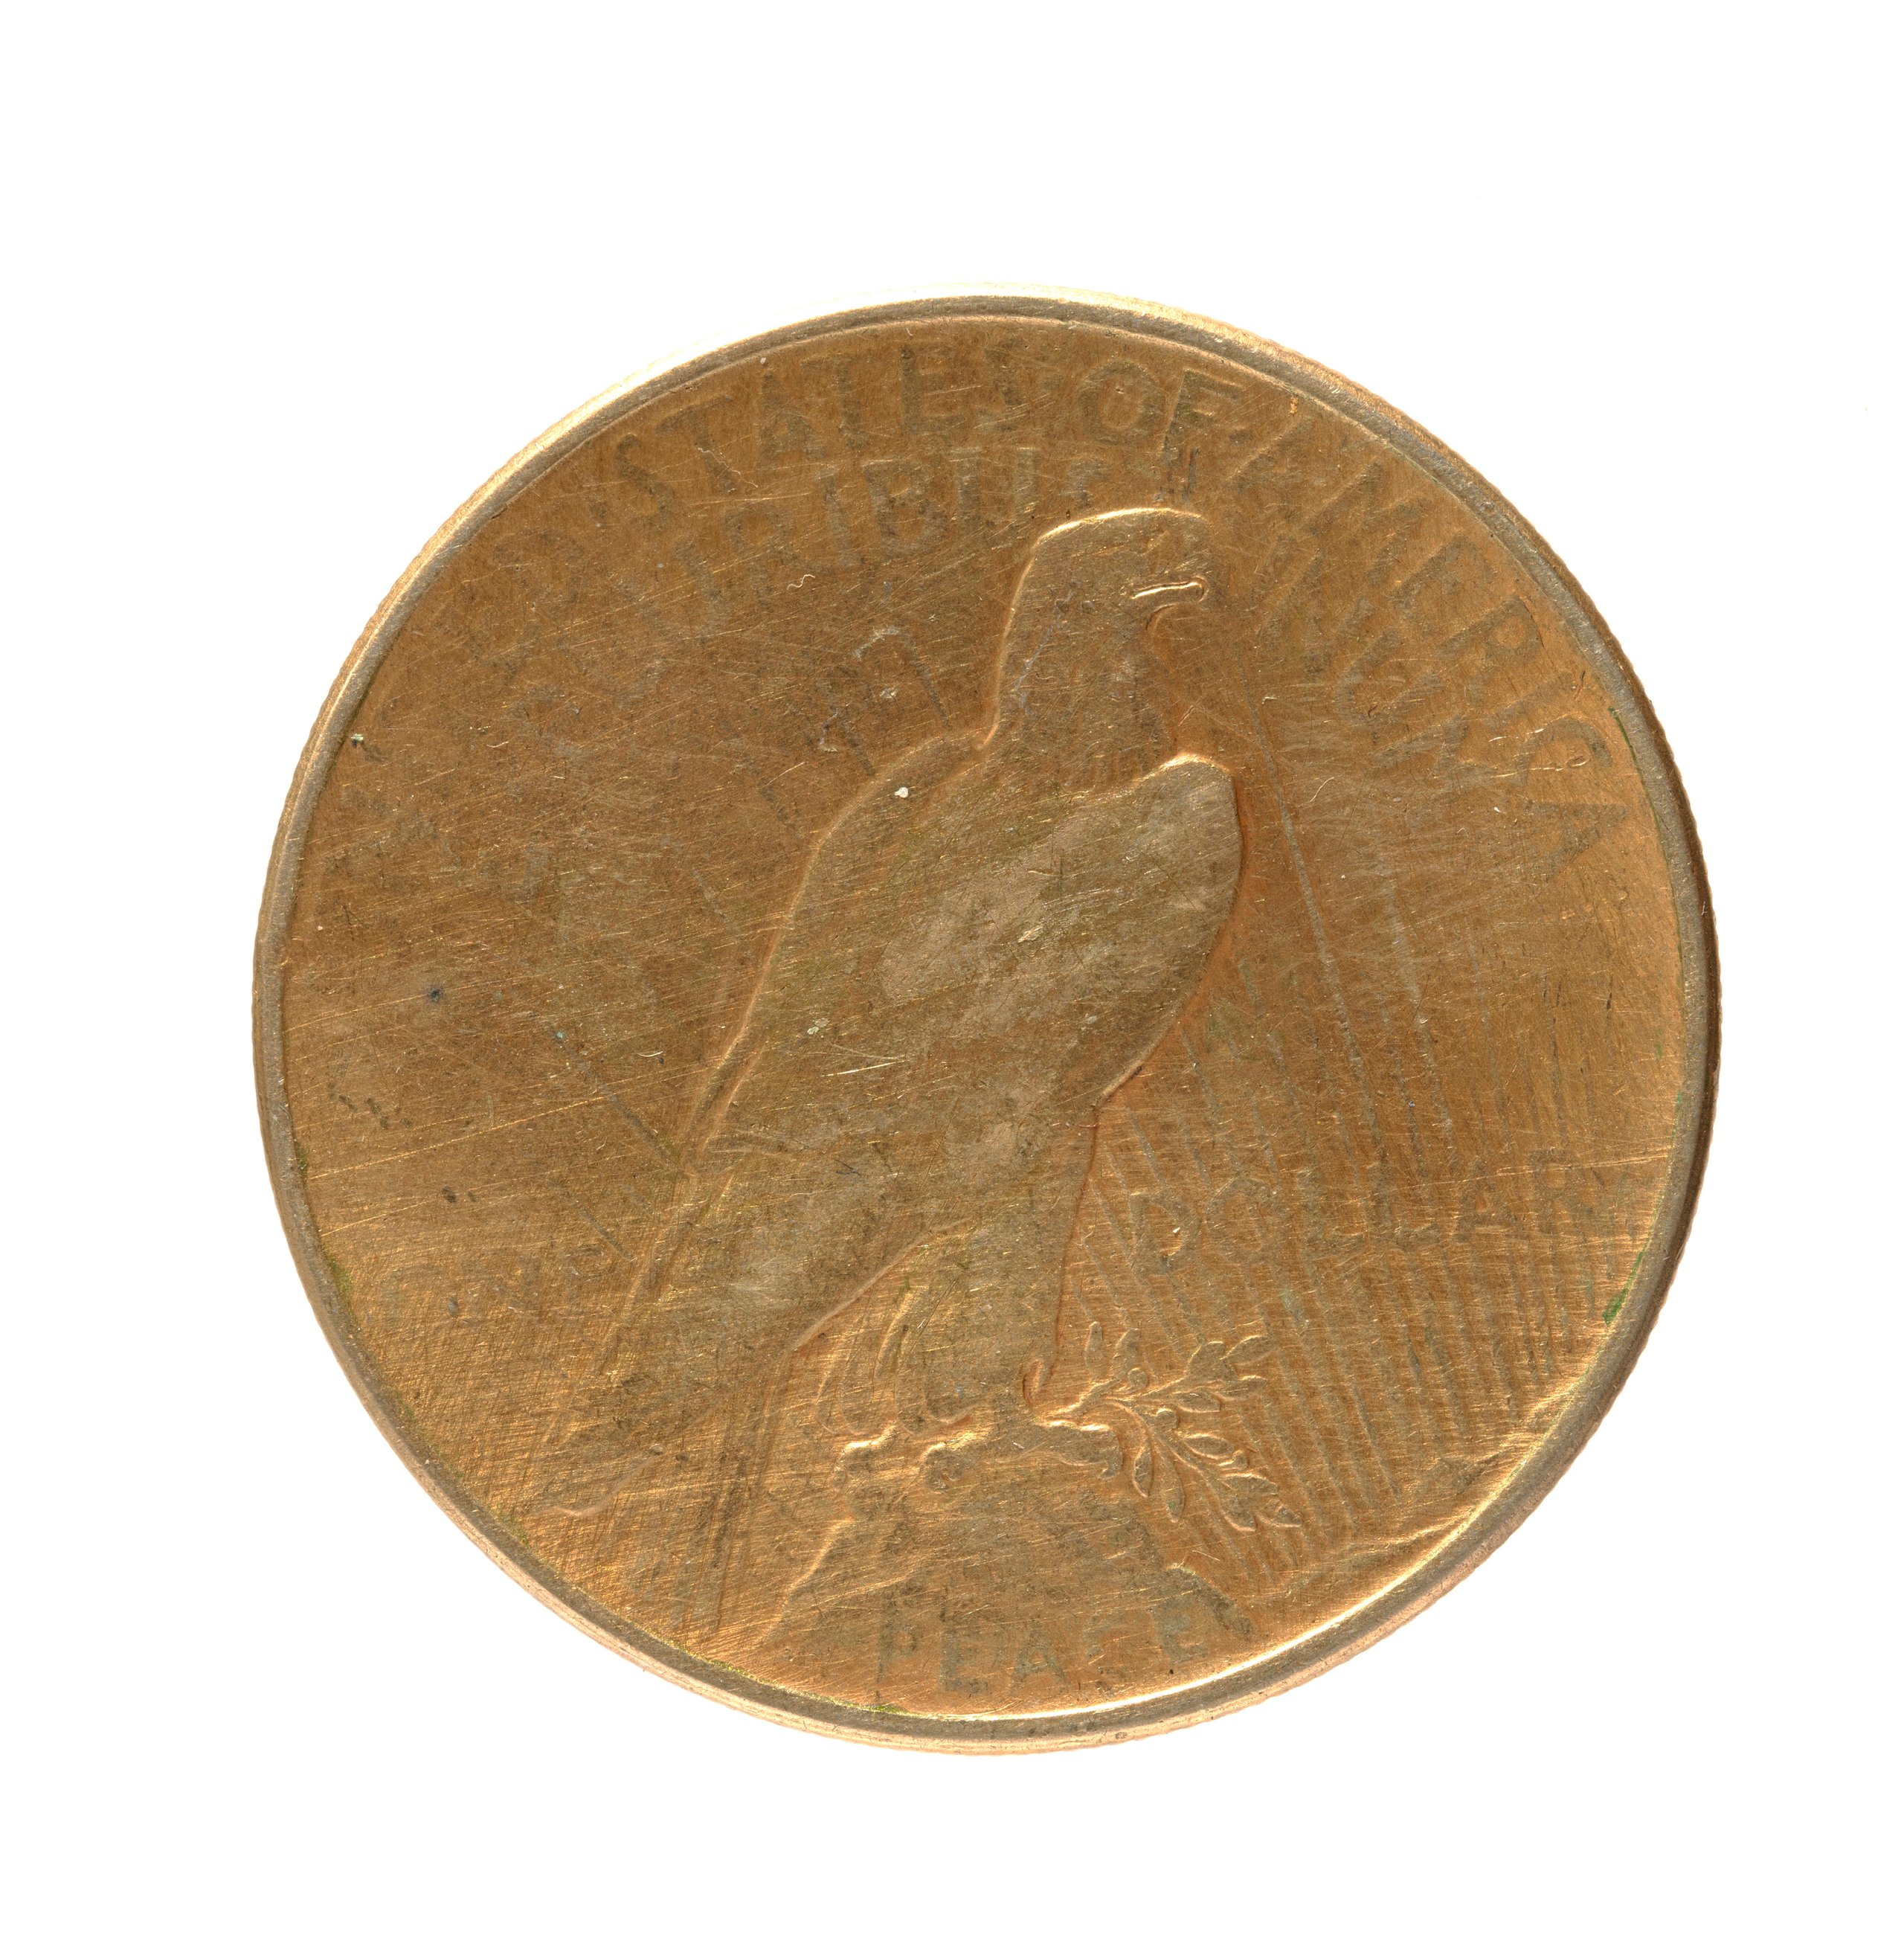 American commemorative peace One Dollar coin